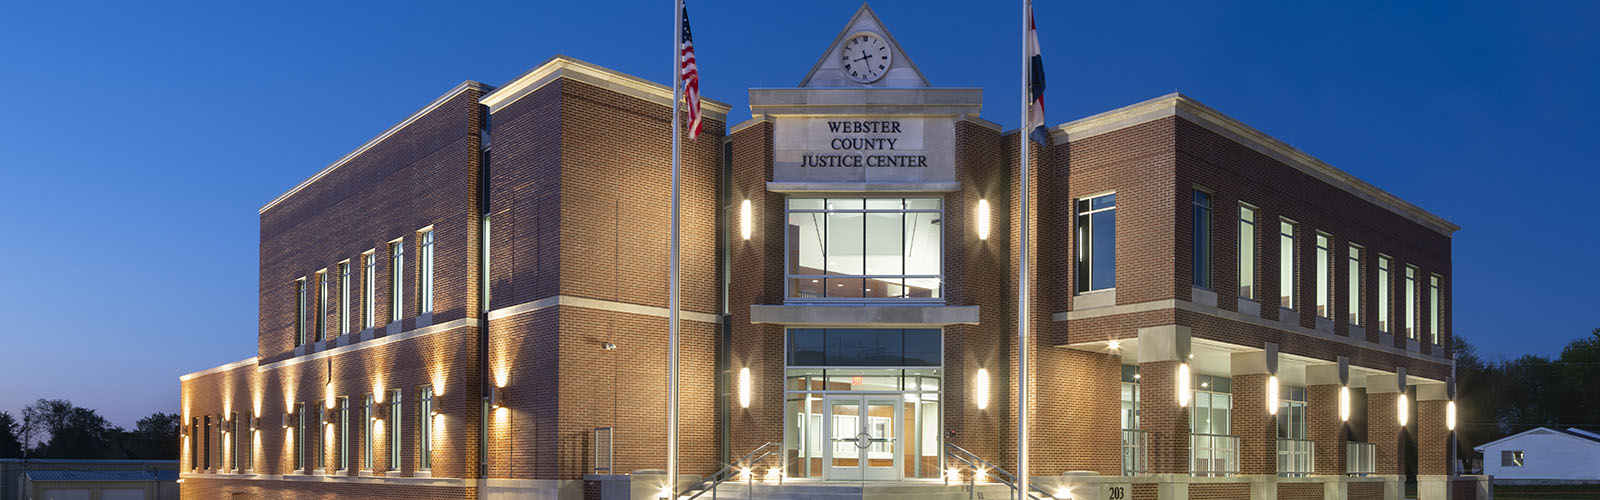 Webster County Justice Center